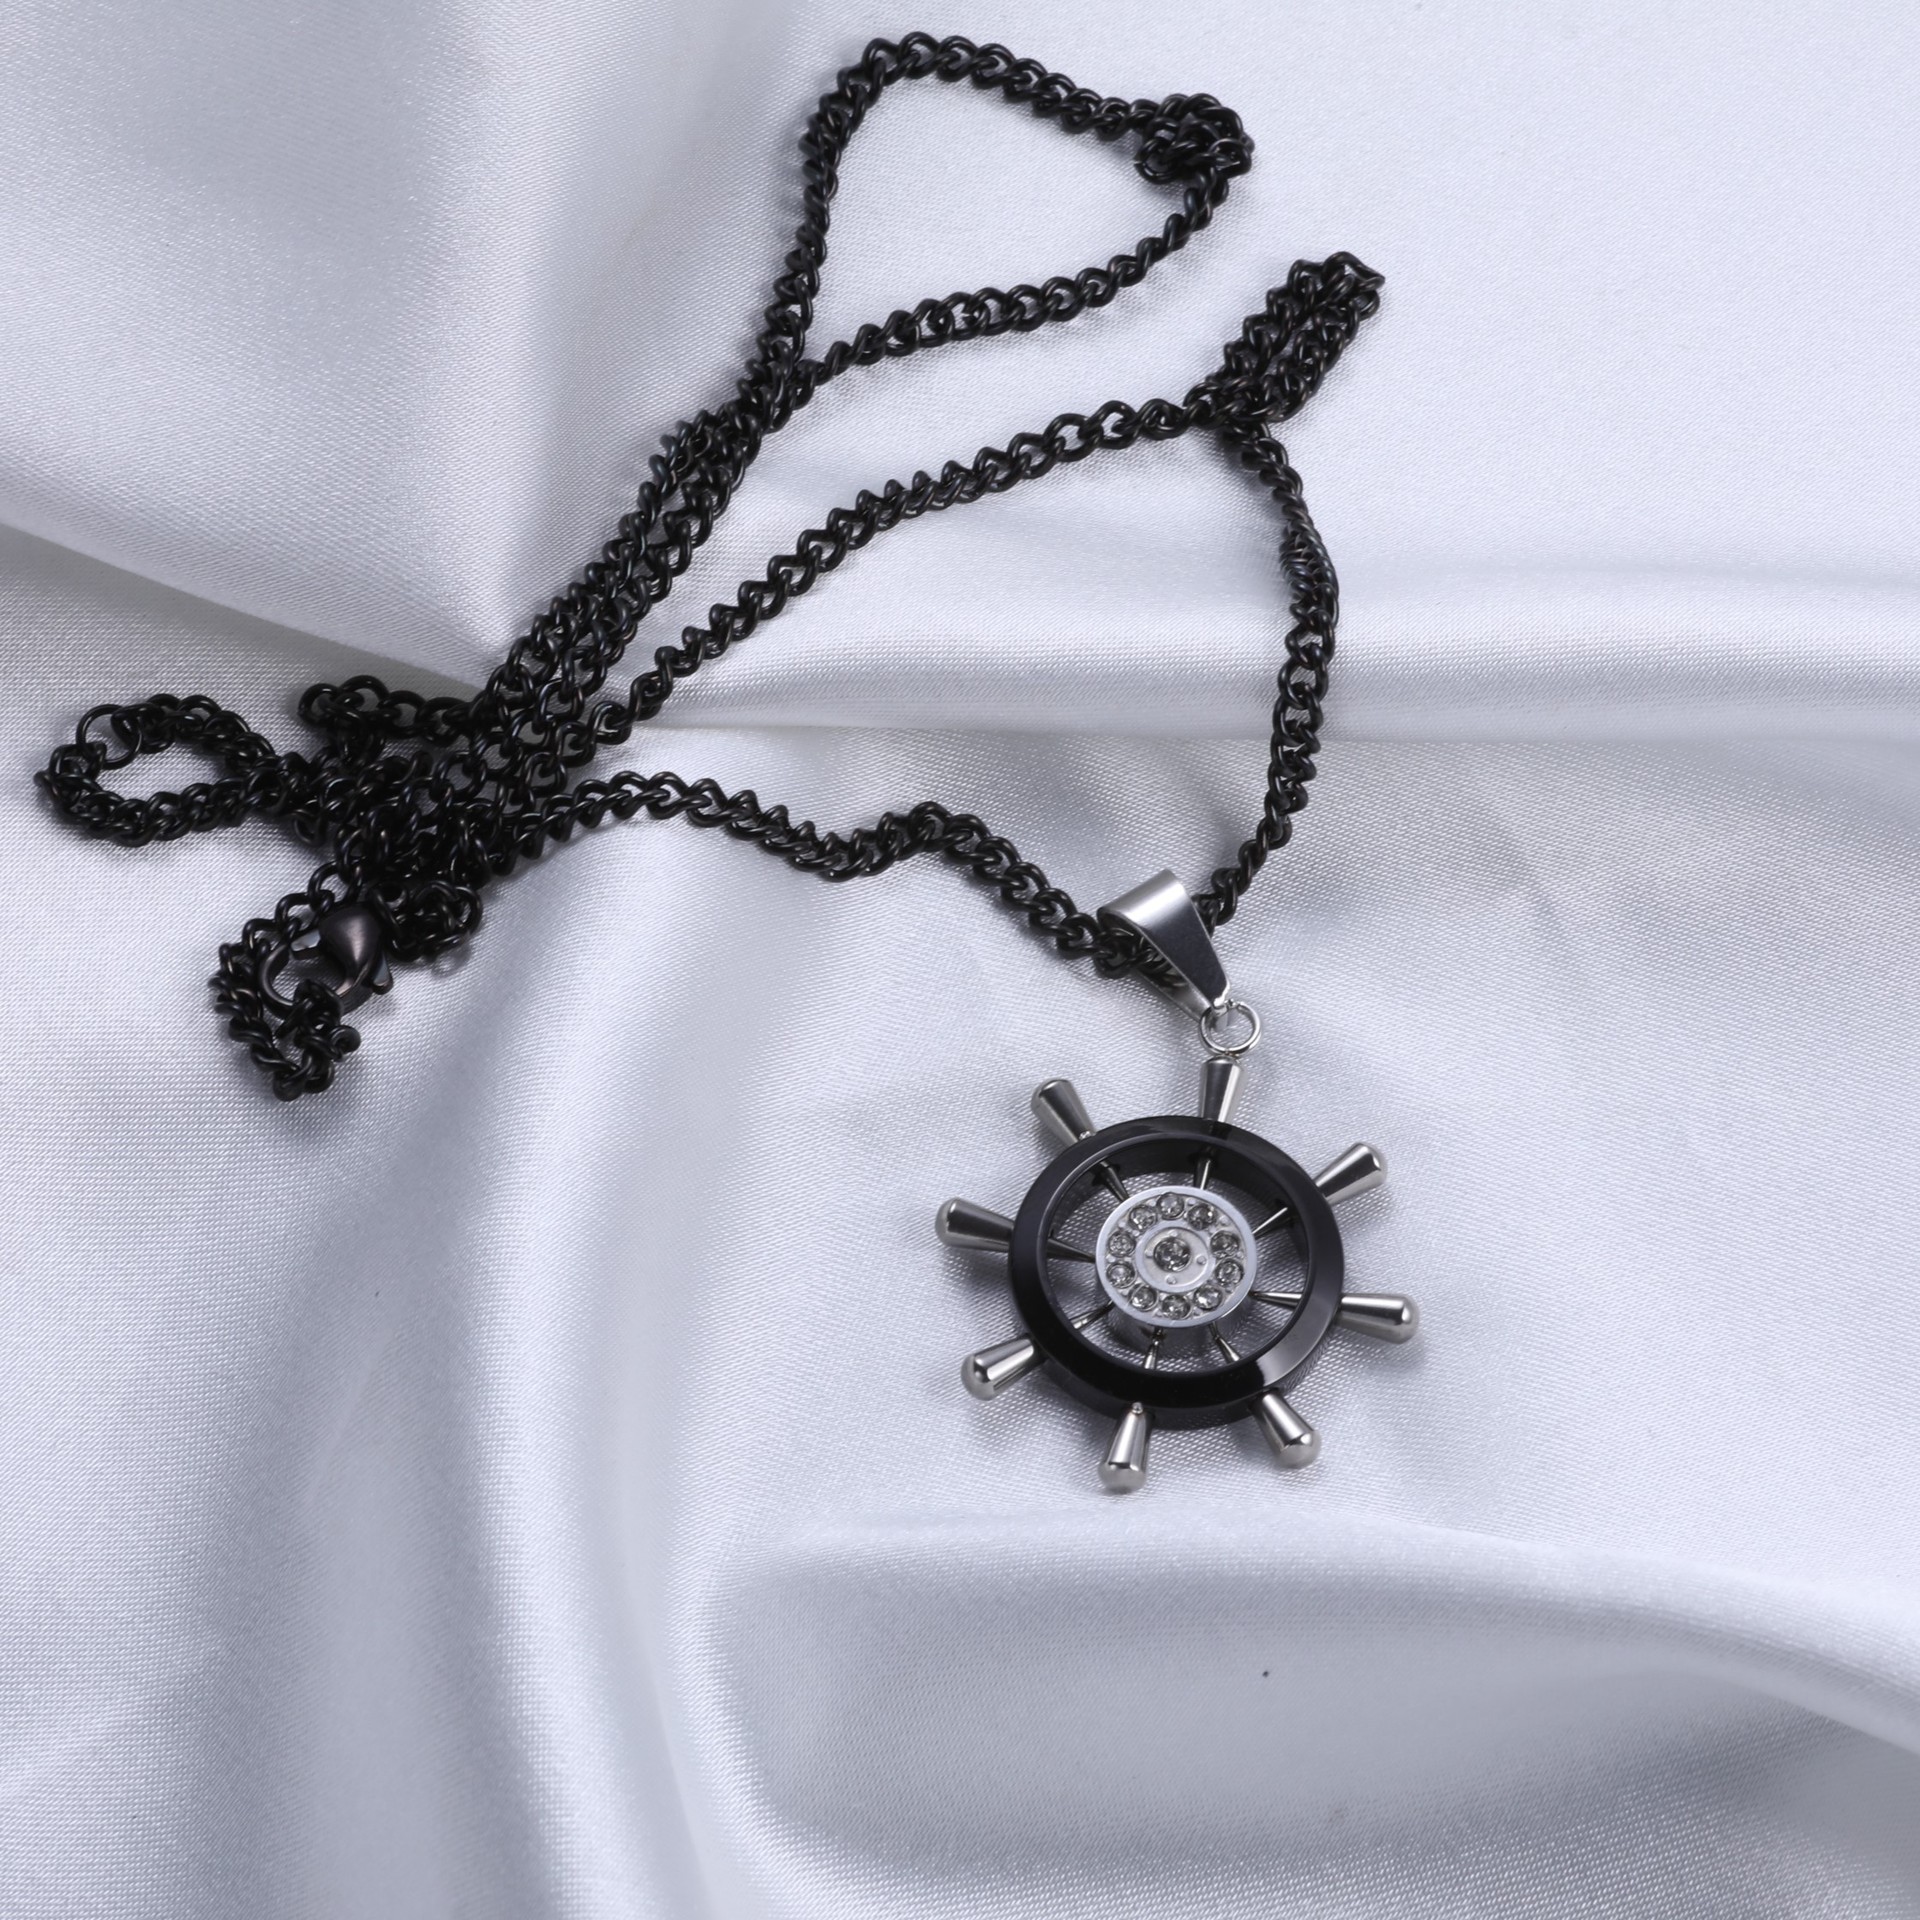 Black pendant + side chain